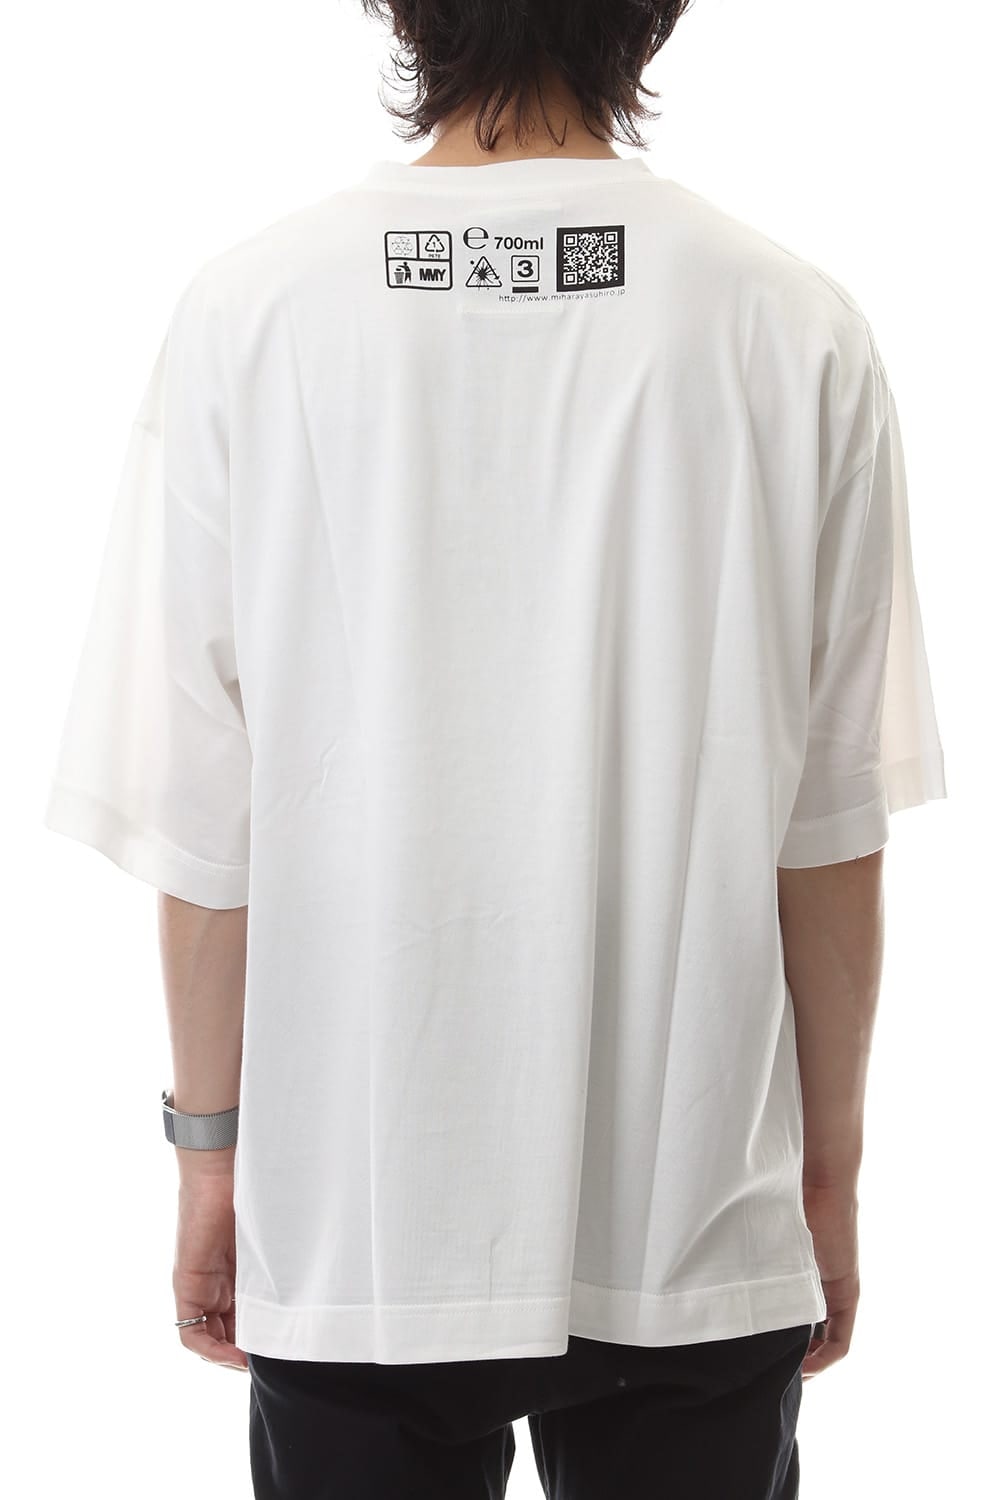 "MIHARA" Printed t-shirt White